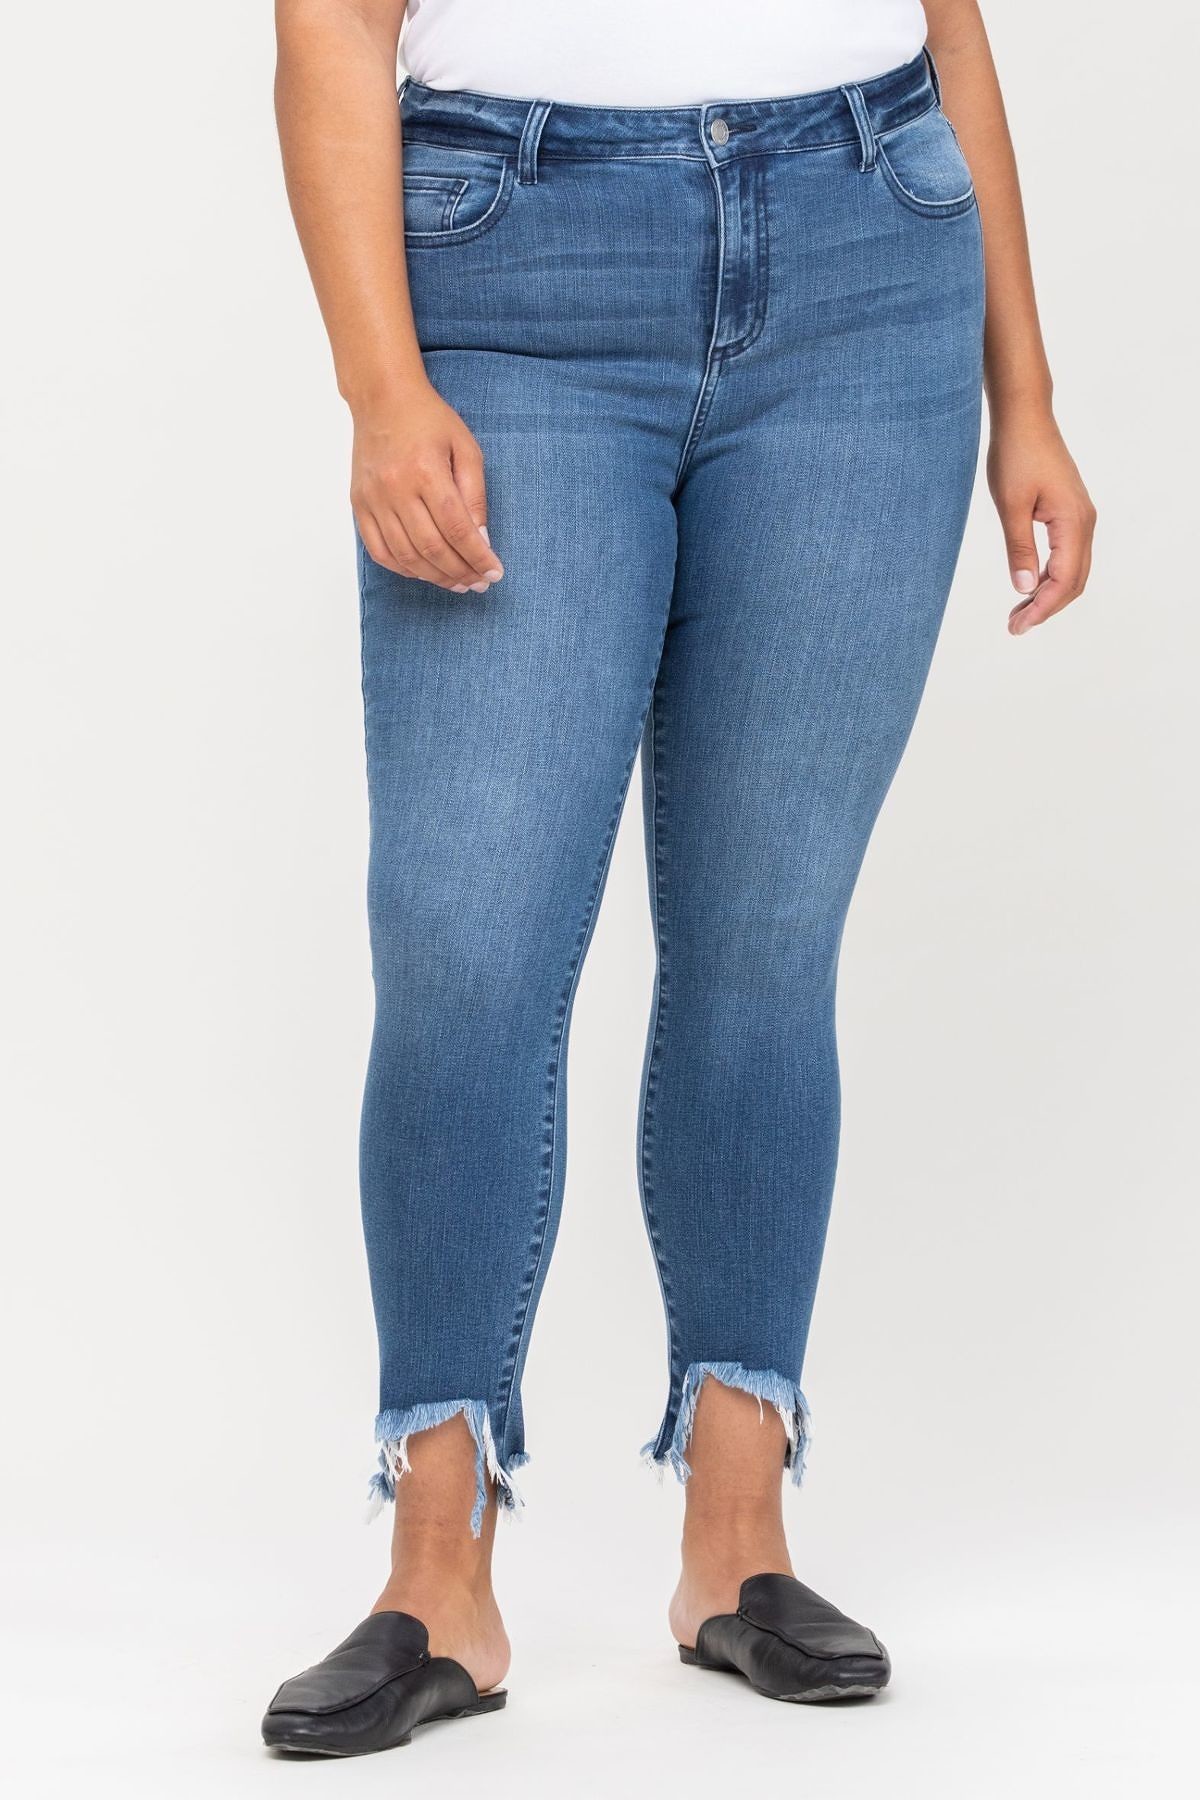 Cello Jeans > Plus Size > #WV77436MP − LAShowroom.com